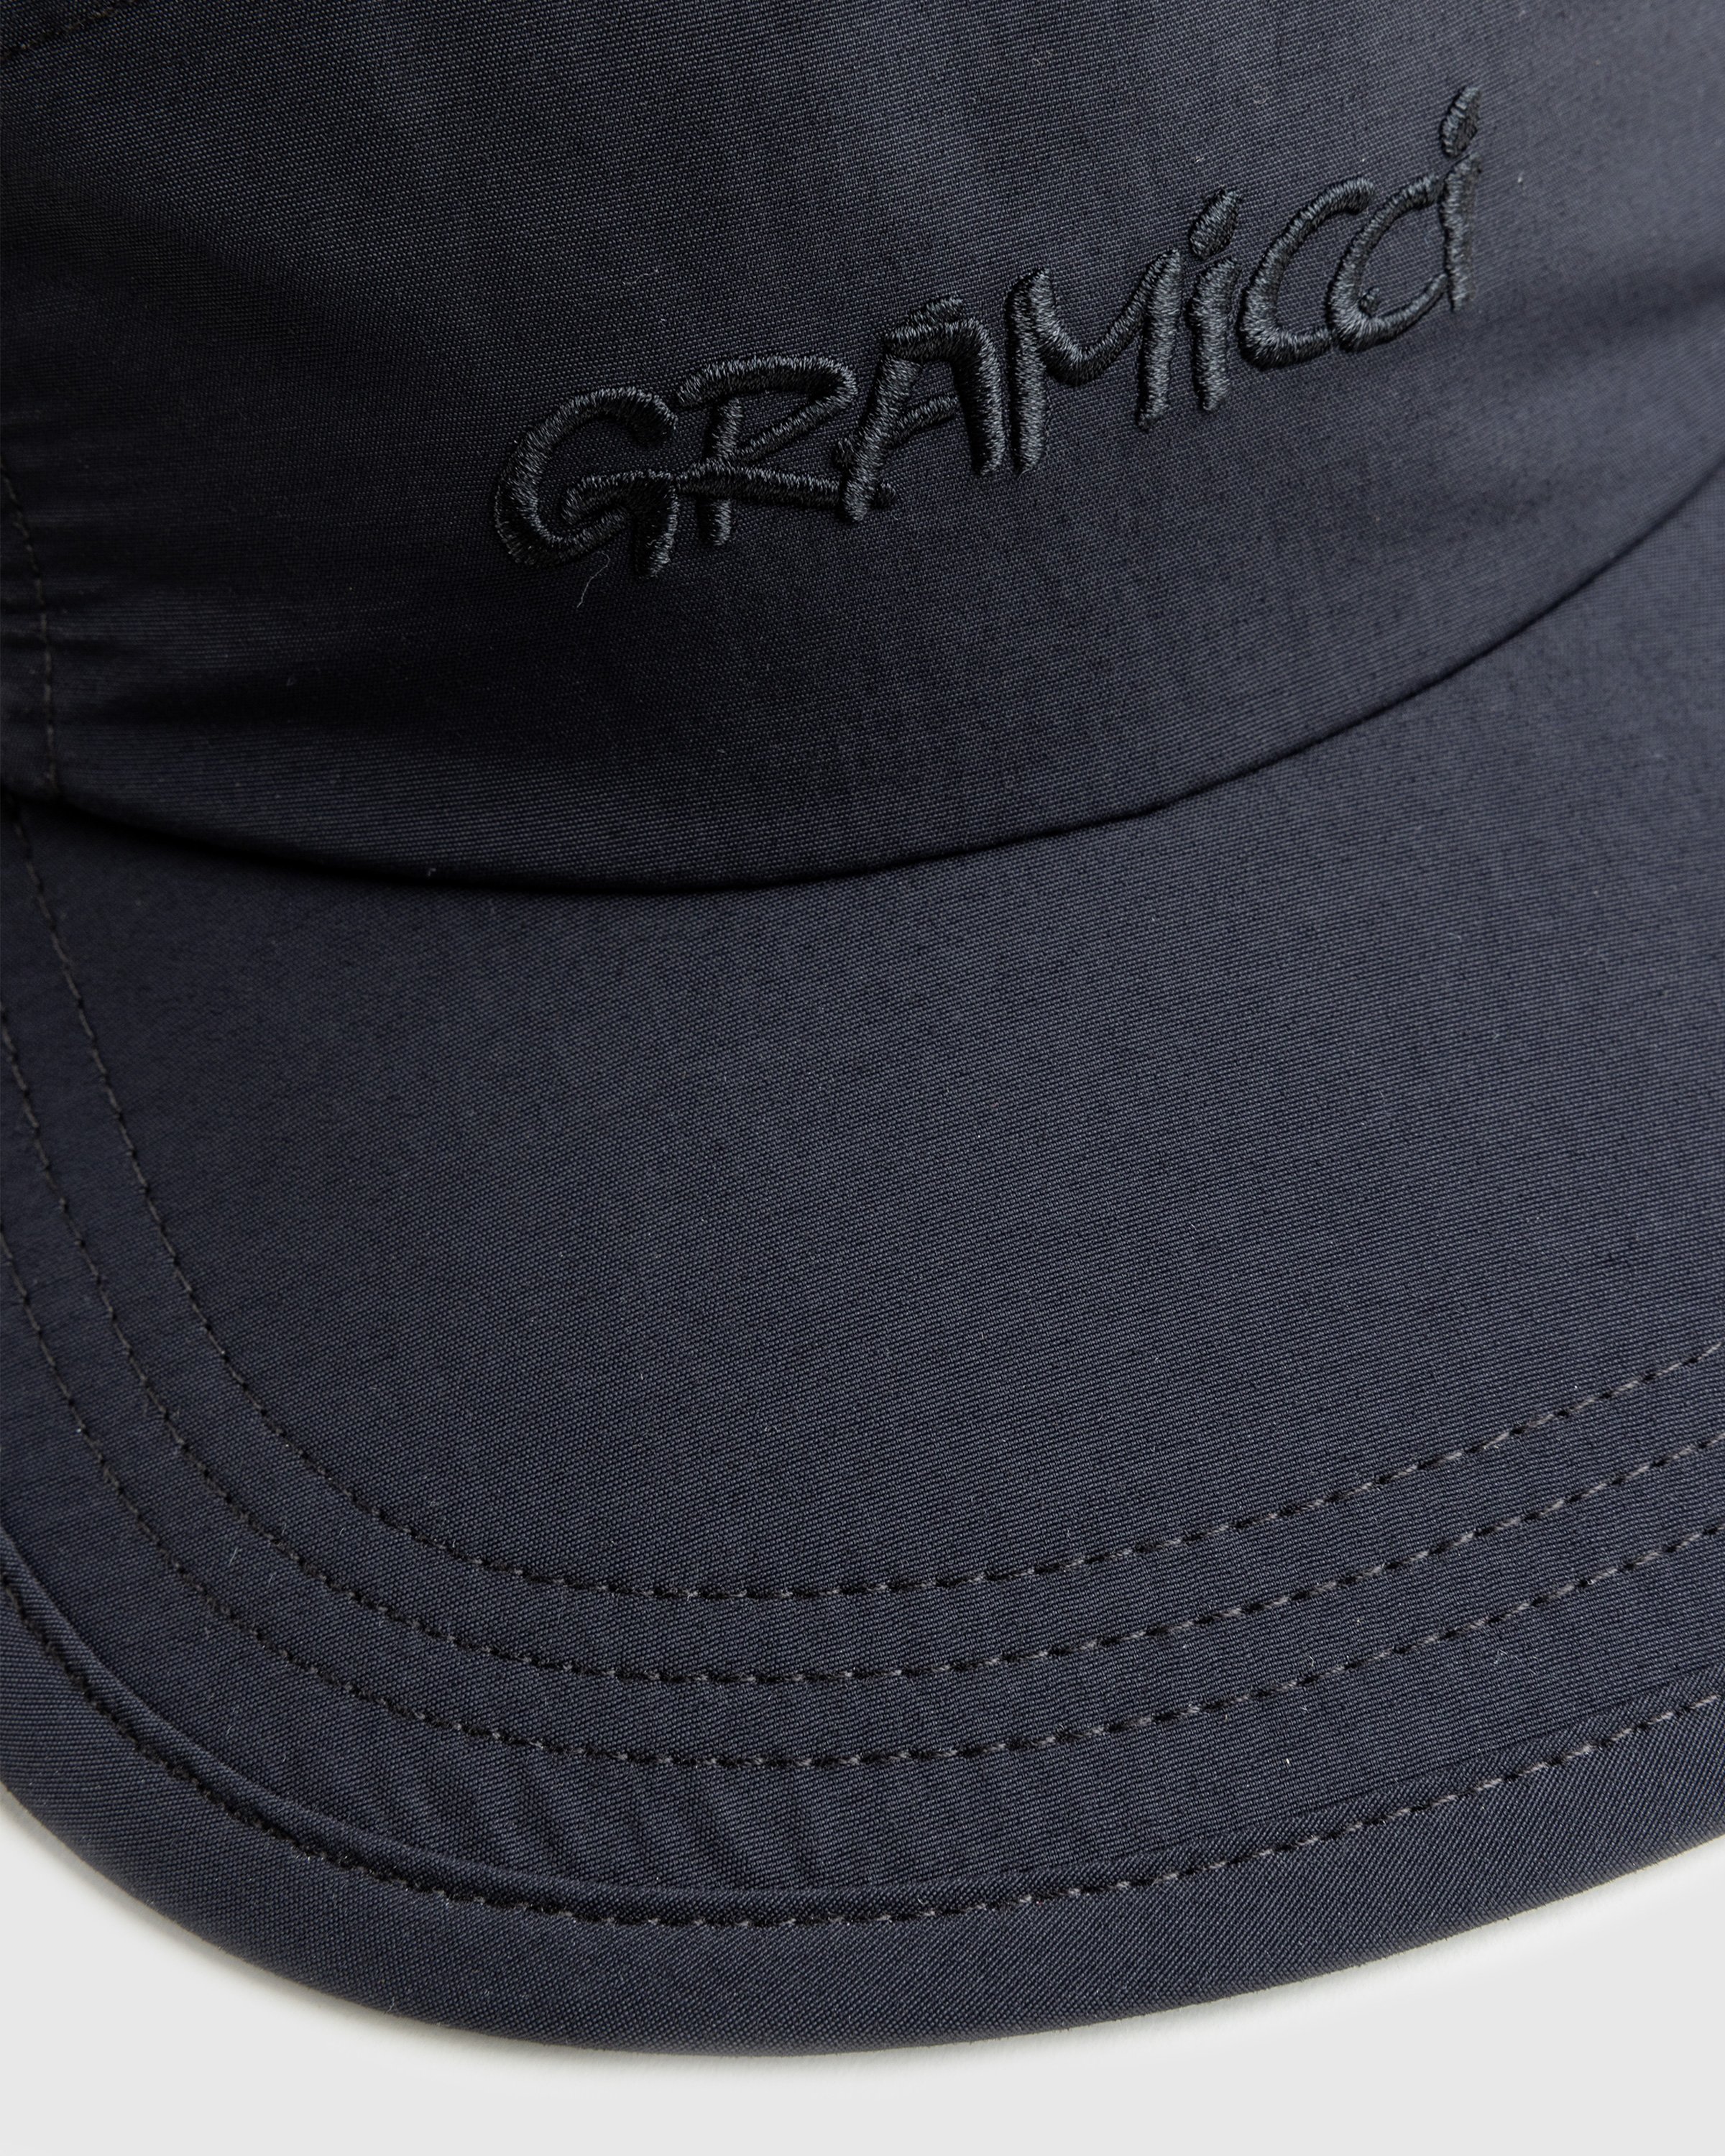 Gramicci - NYLON CAP BLACK - Accessories - Black - Image 5